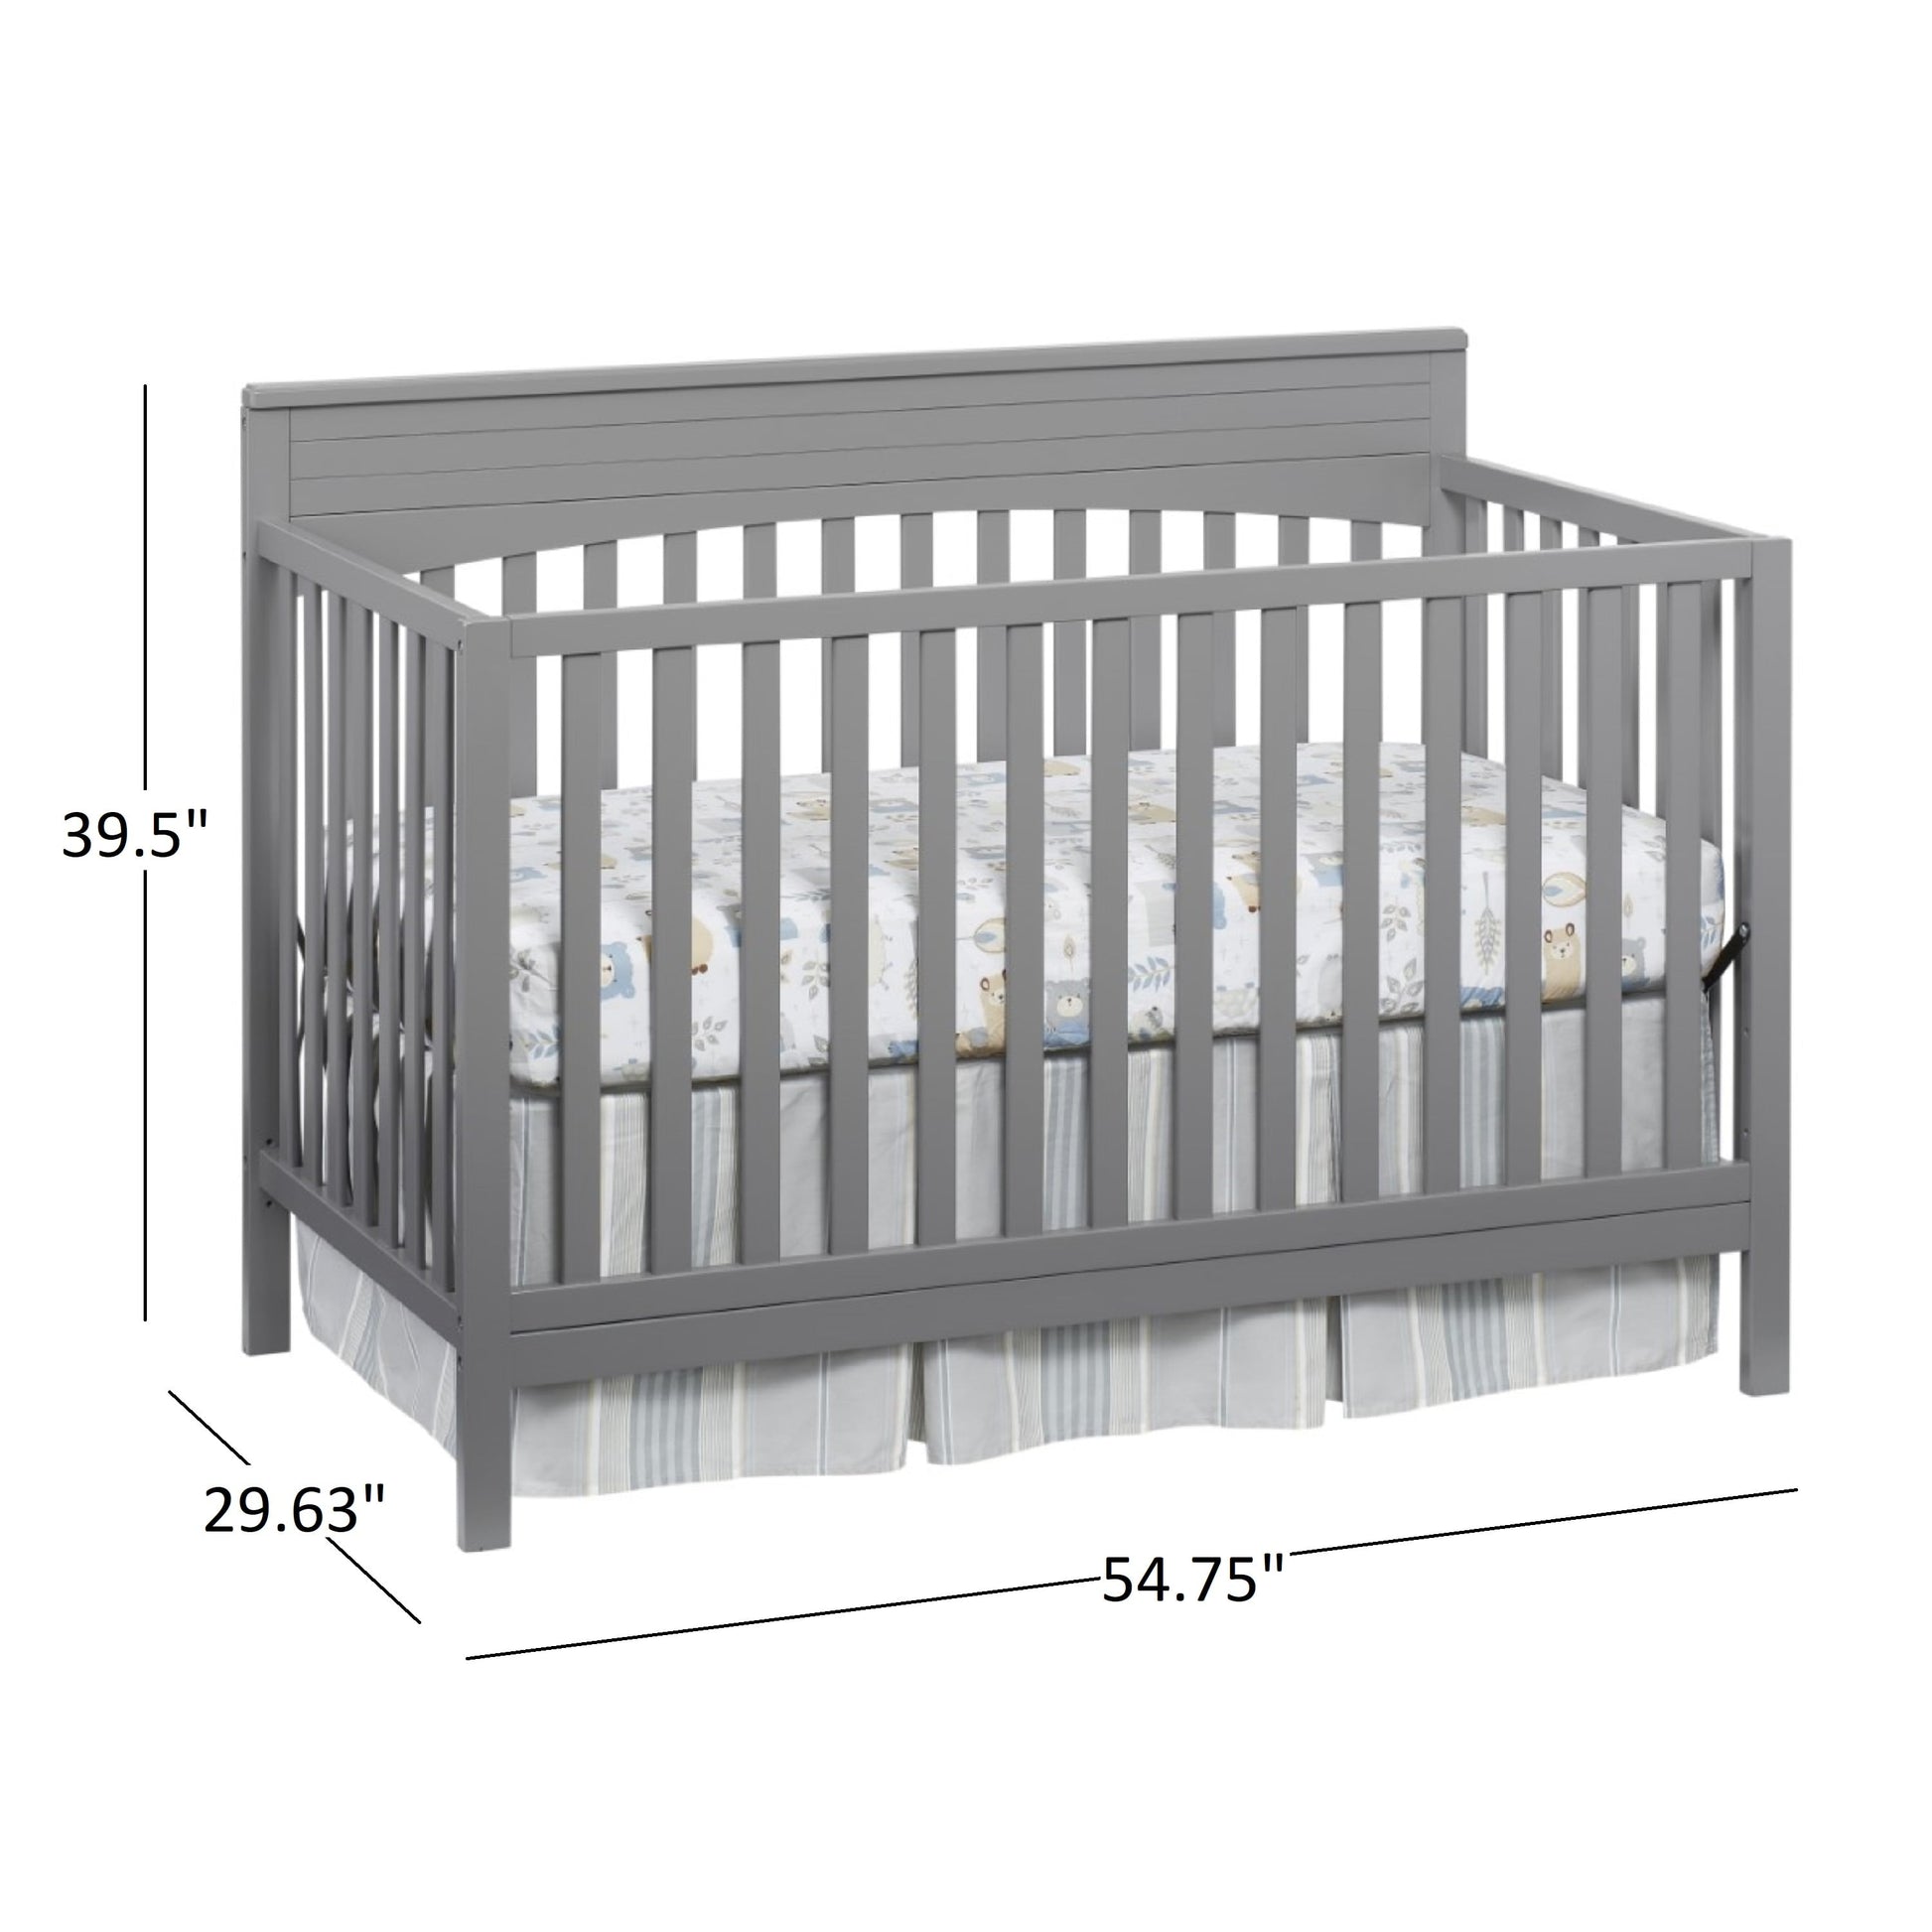 Harper 4-In-1 Convertible Crib, Dove Gray, GREENGUARD Gold Certified, Wooden Crib